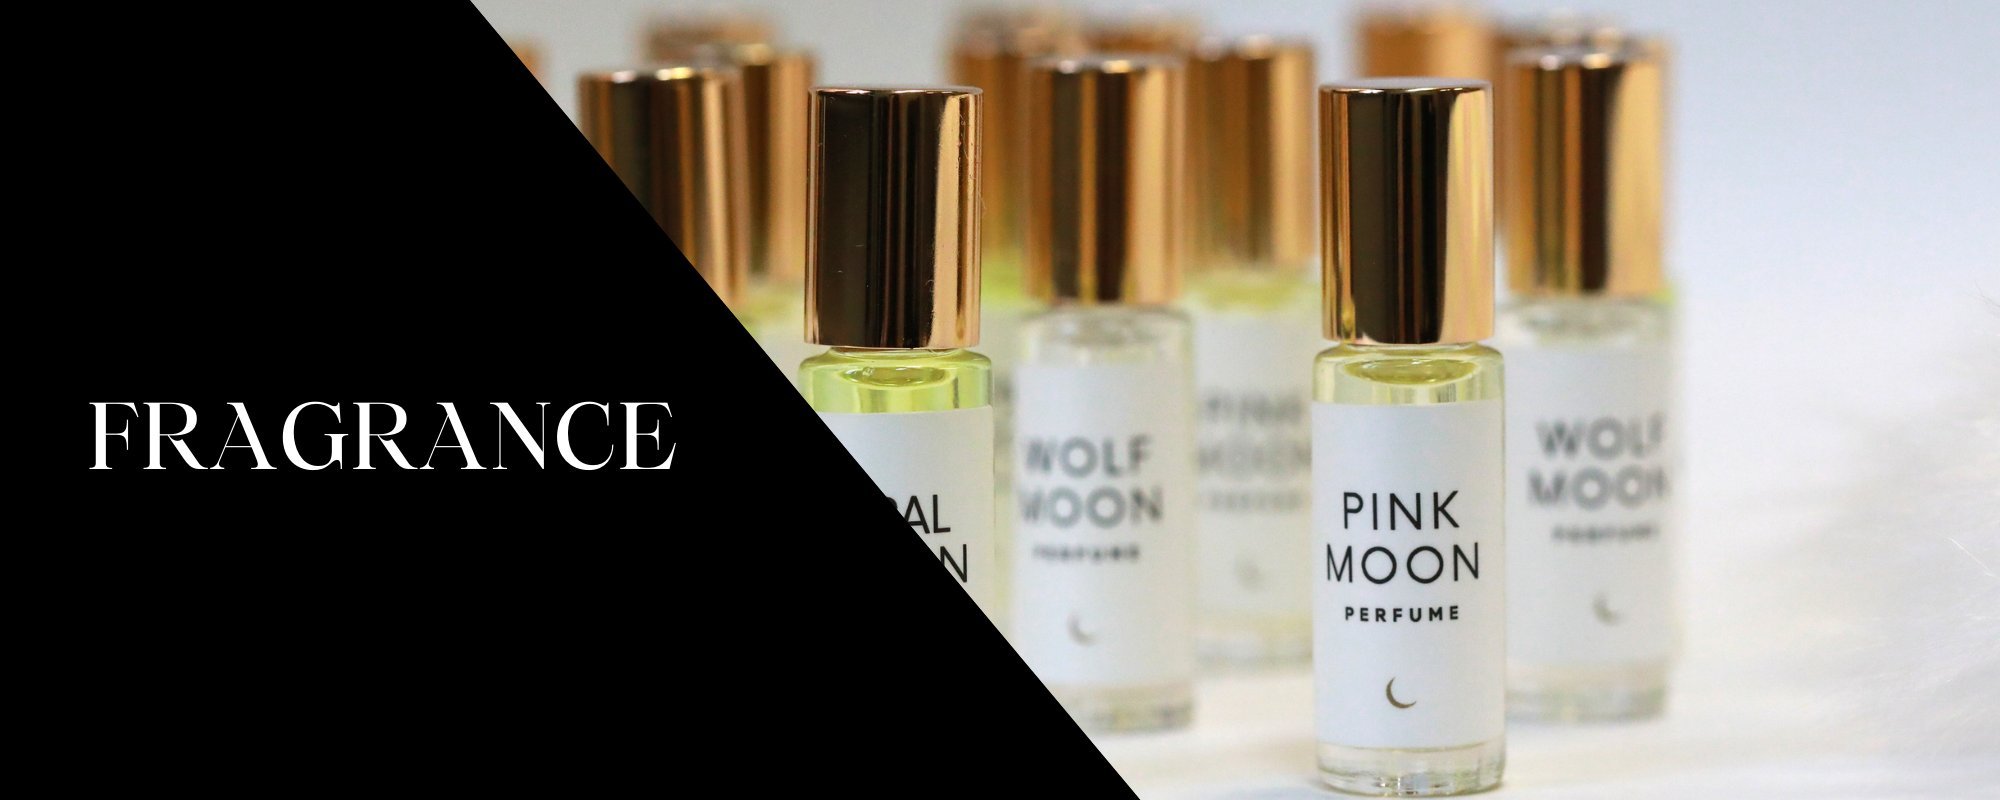 fragrance collection header image